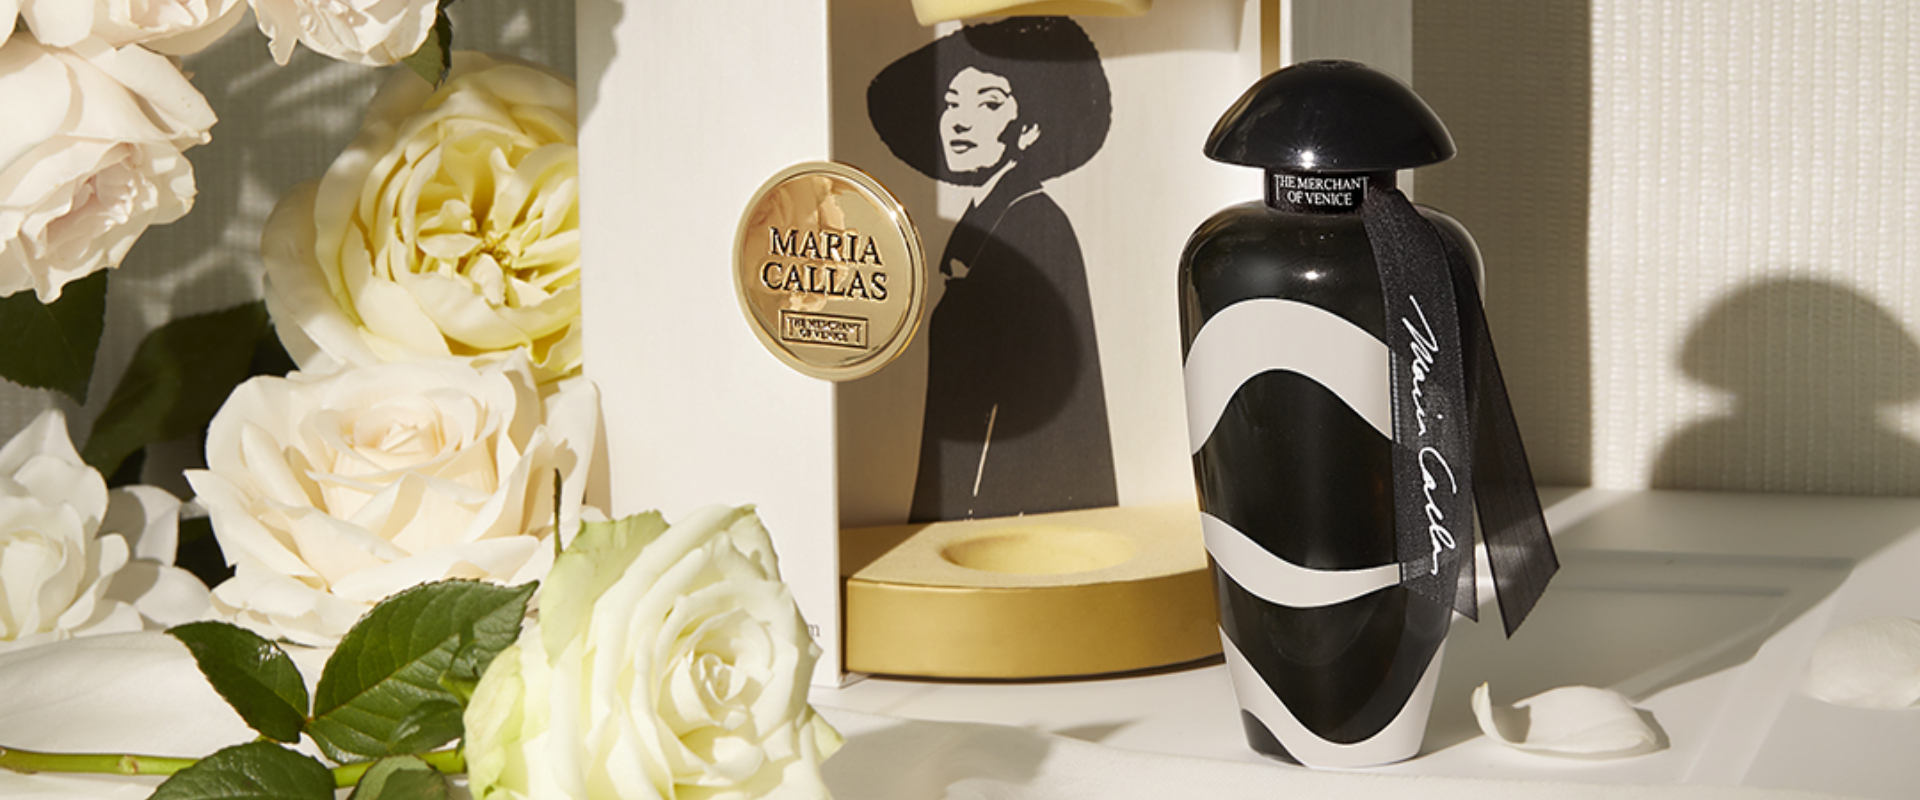 Maria Callas fragrance celebrates the 100th anniversary of the birth of the all-time diva